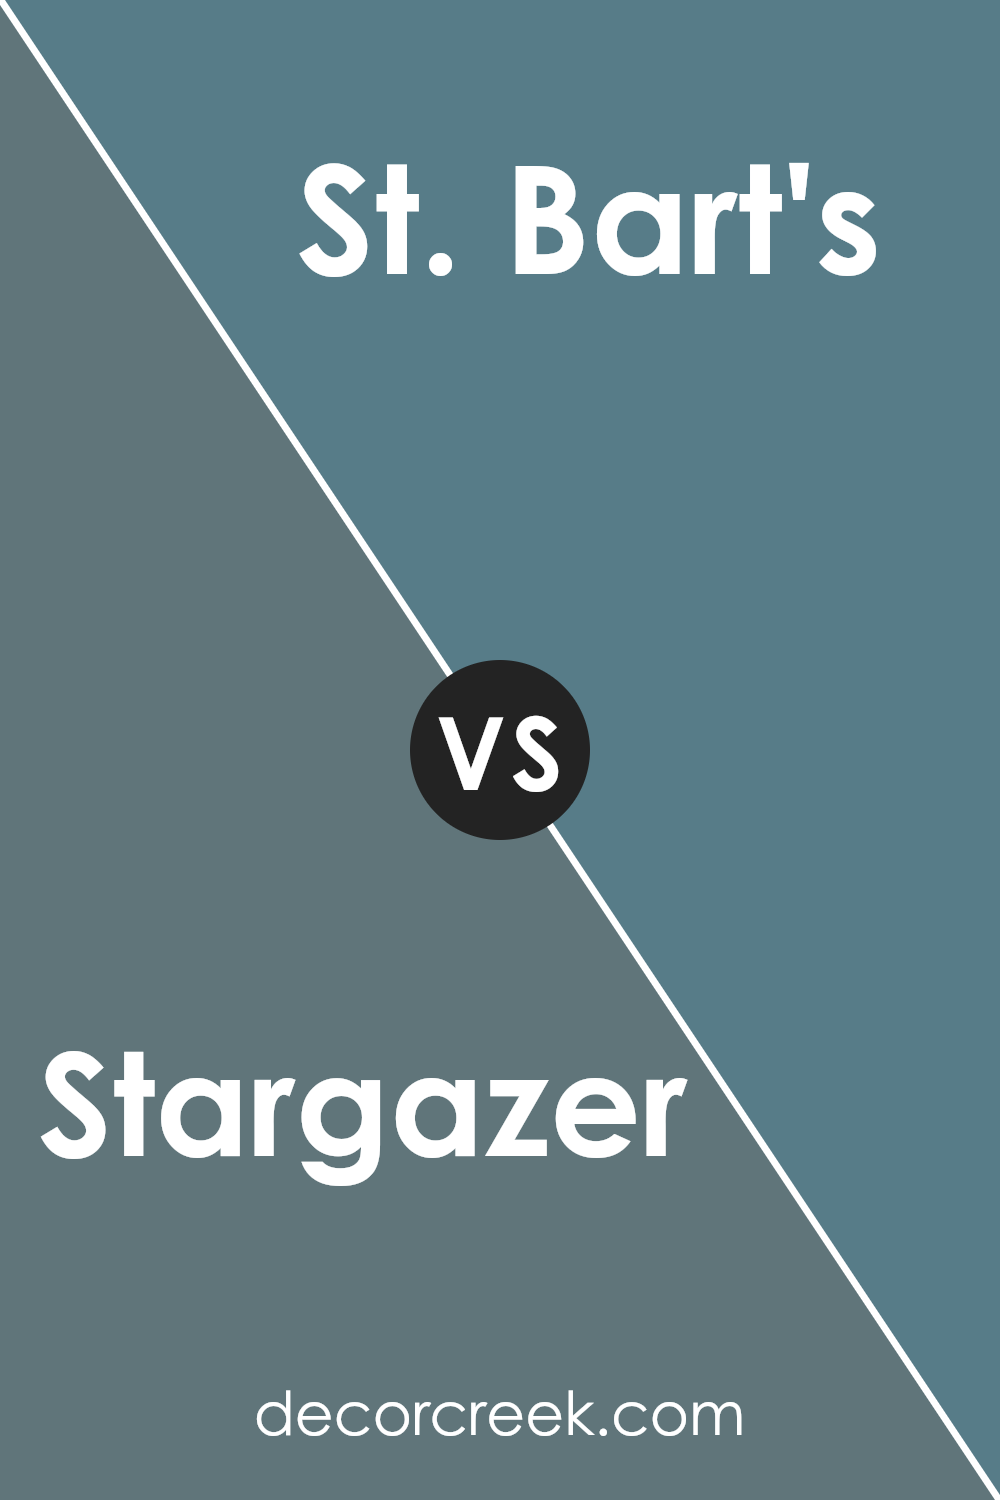 stargazer_sw_9635_vs_st_barts_sw_7614